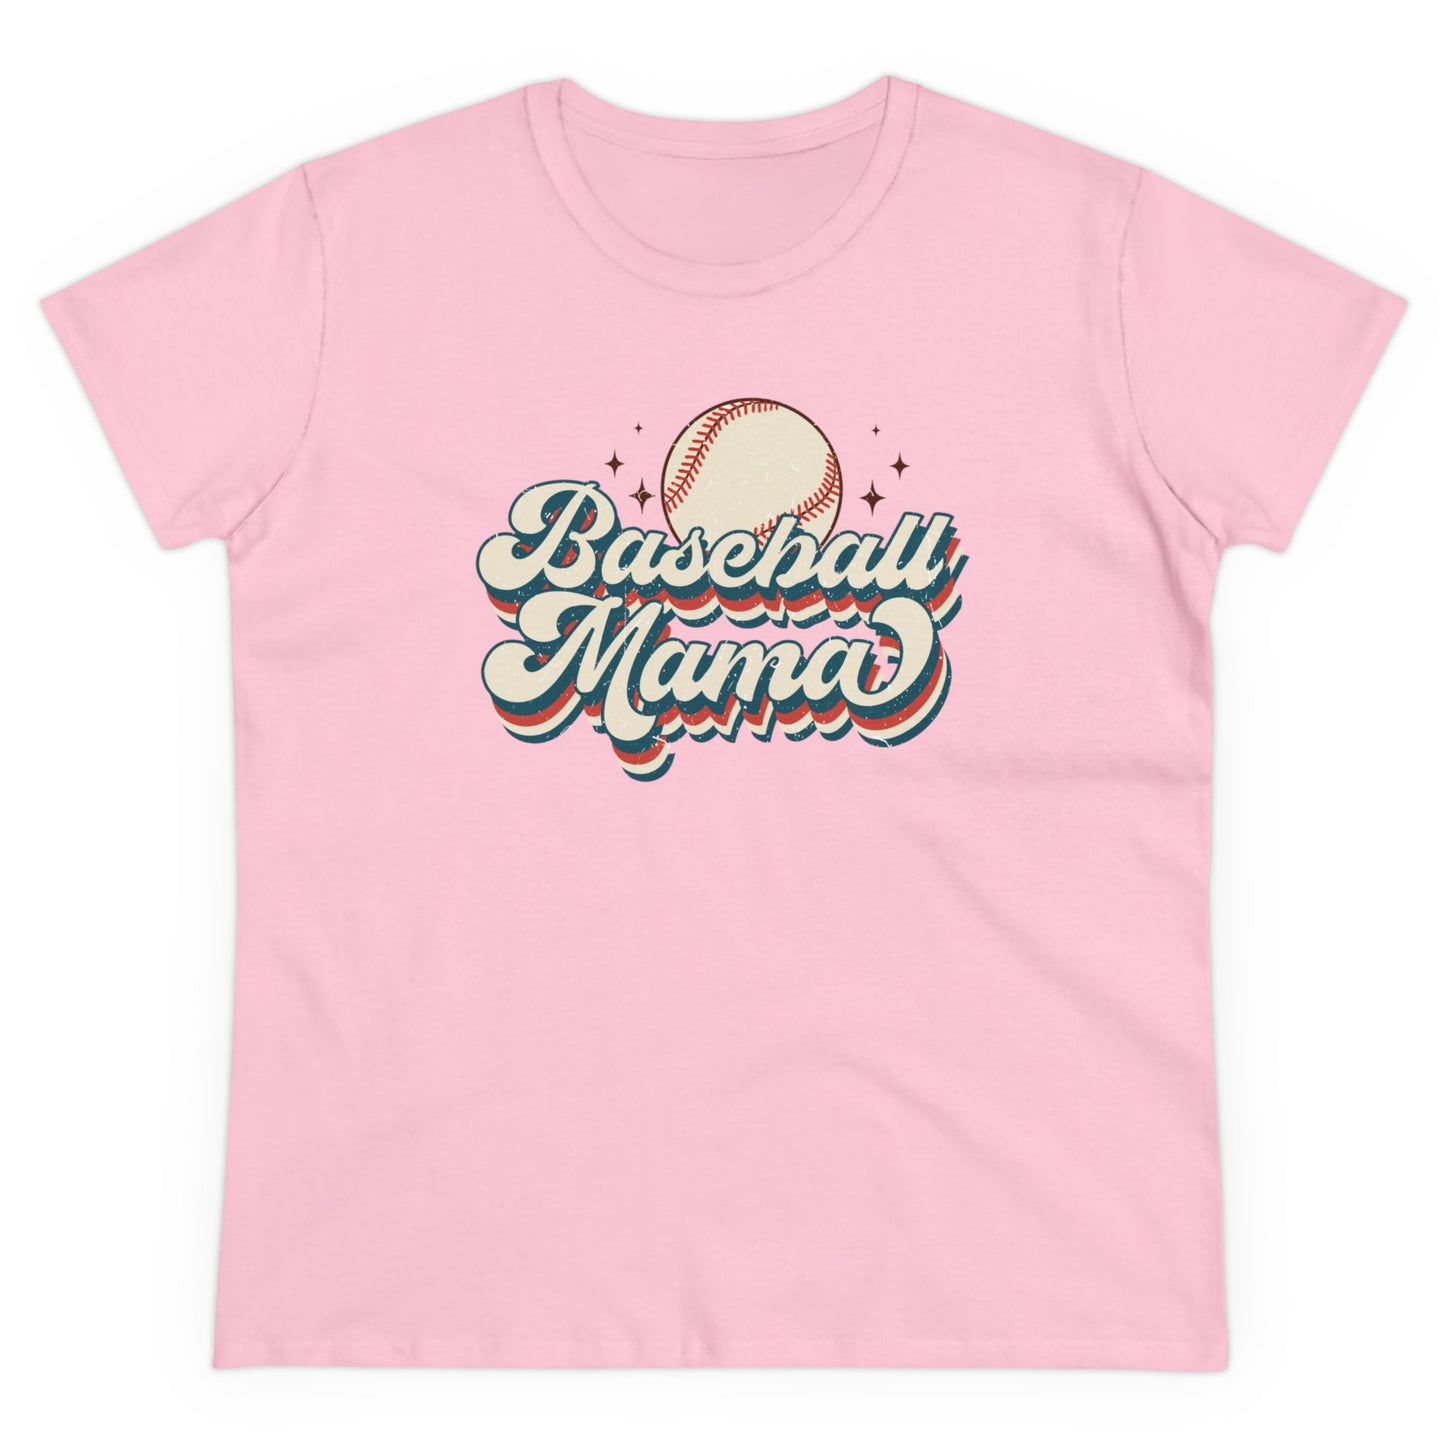 Baseball Mom - Women's Midweight Cotton Tee